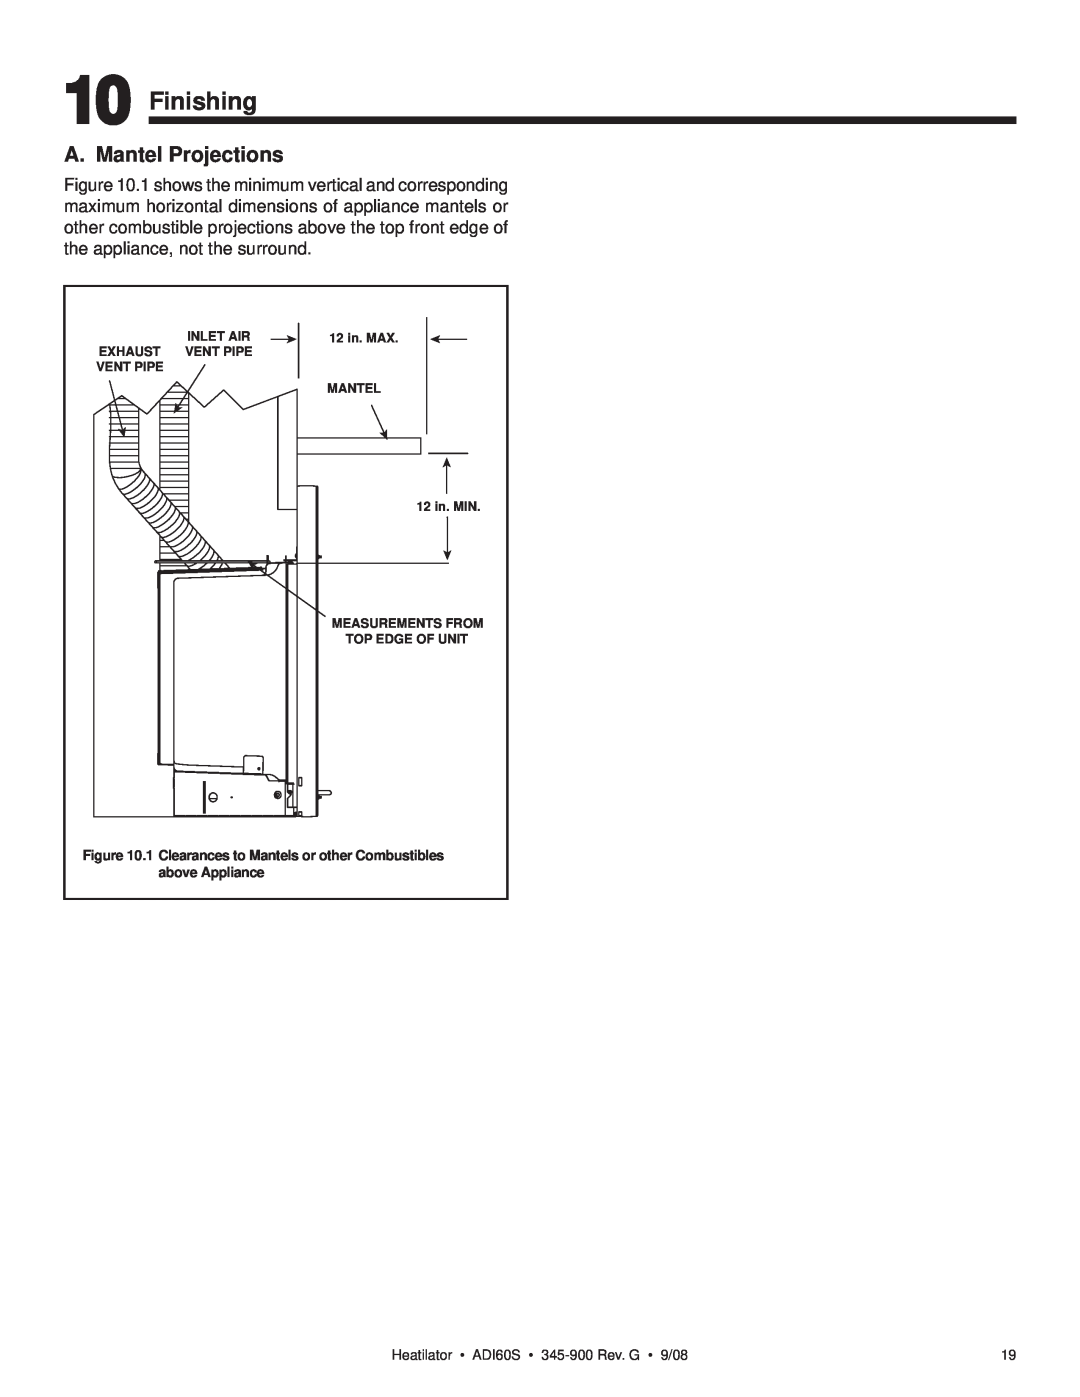 Heatiator Finishing, A. Mantel Projections, Heatilator ADI60S 345-900Rev. G 9/08, Inlet Air, Exhaust Vent Pipe 